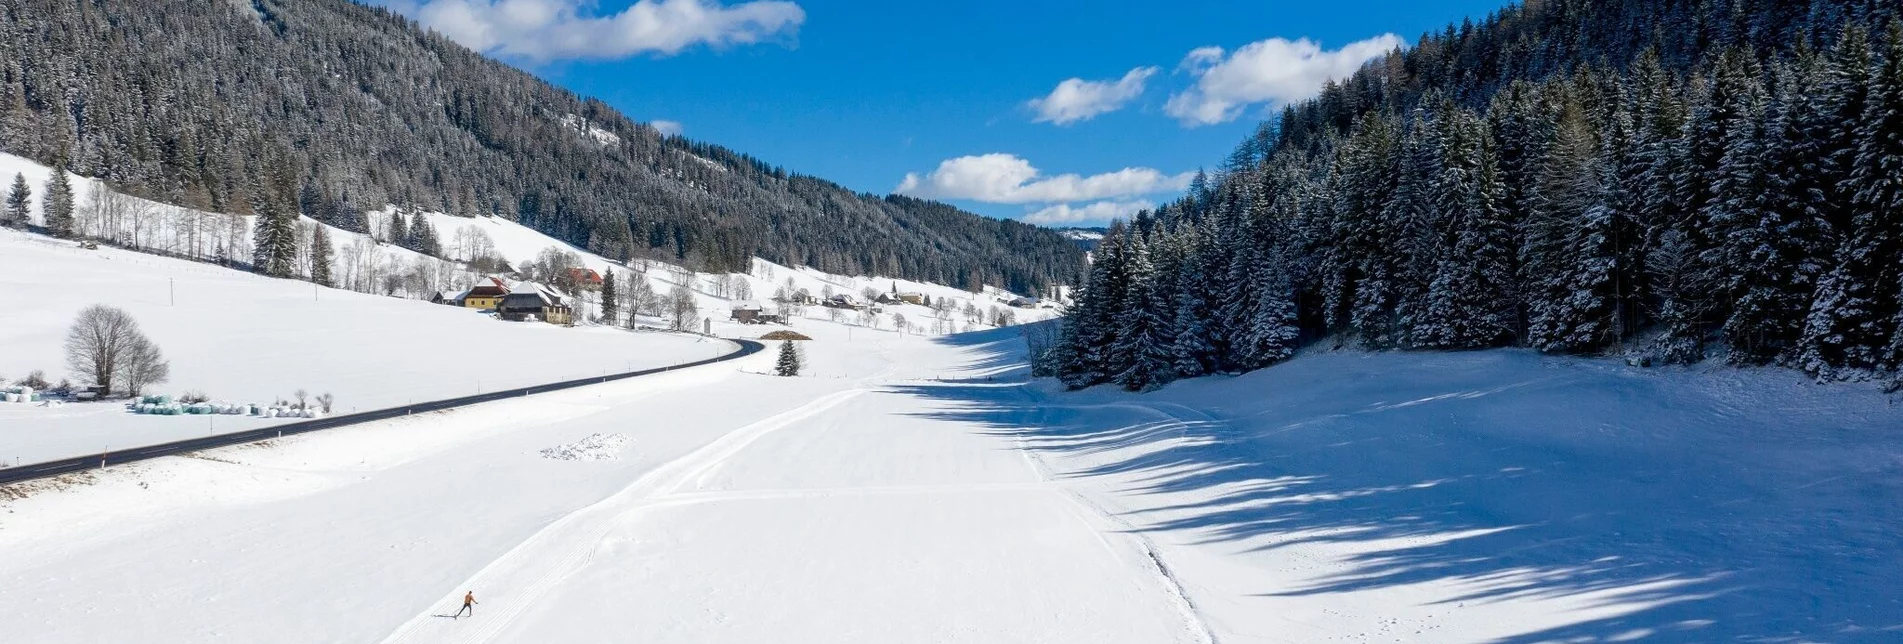 Cross-Country Skiing Weirerteich Loipe - Touren-Impression #1 | © Tourismusverband Region Murau